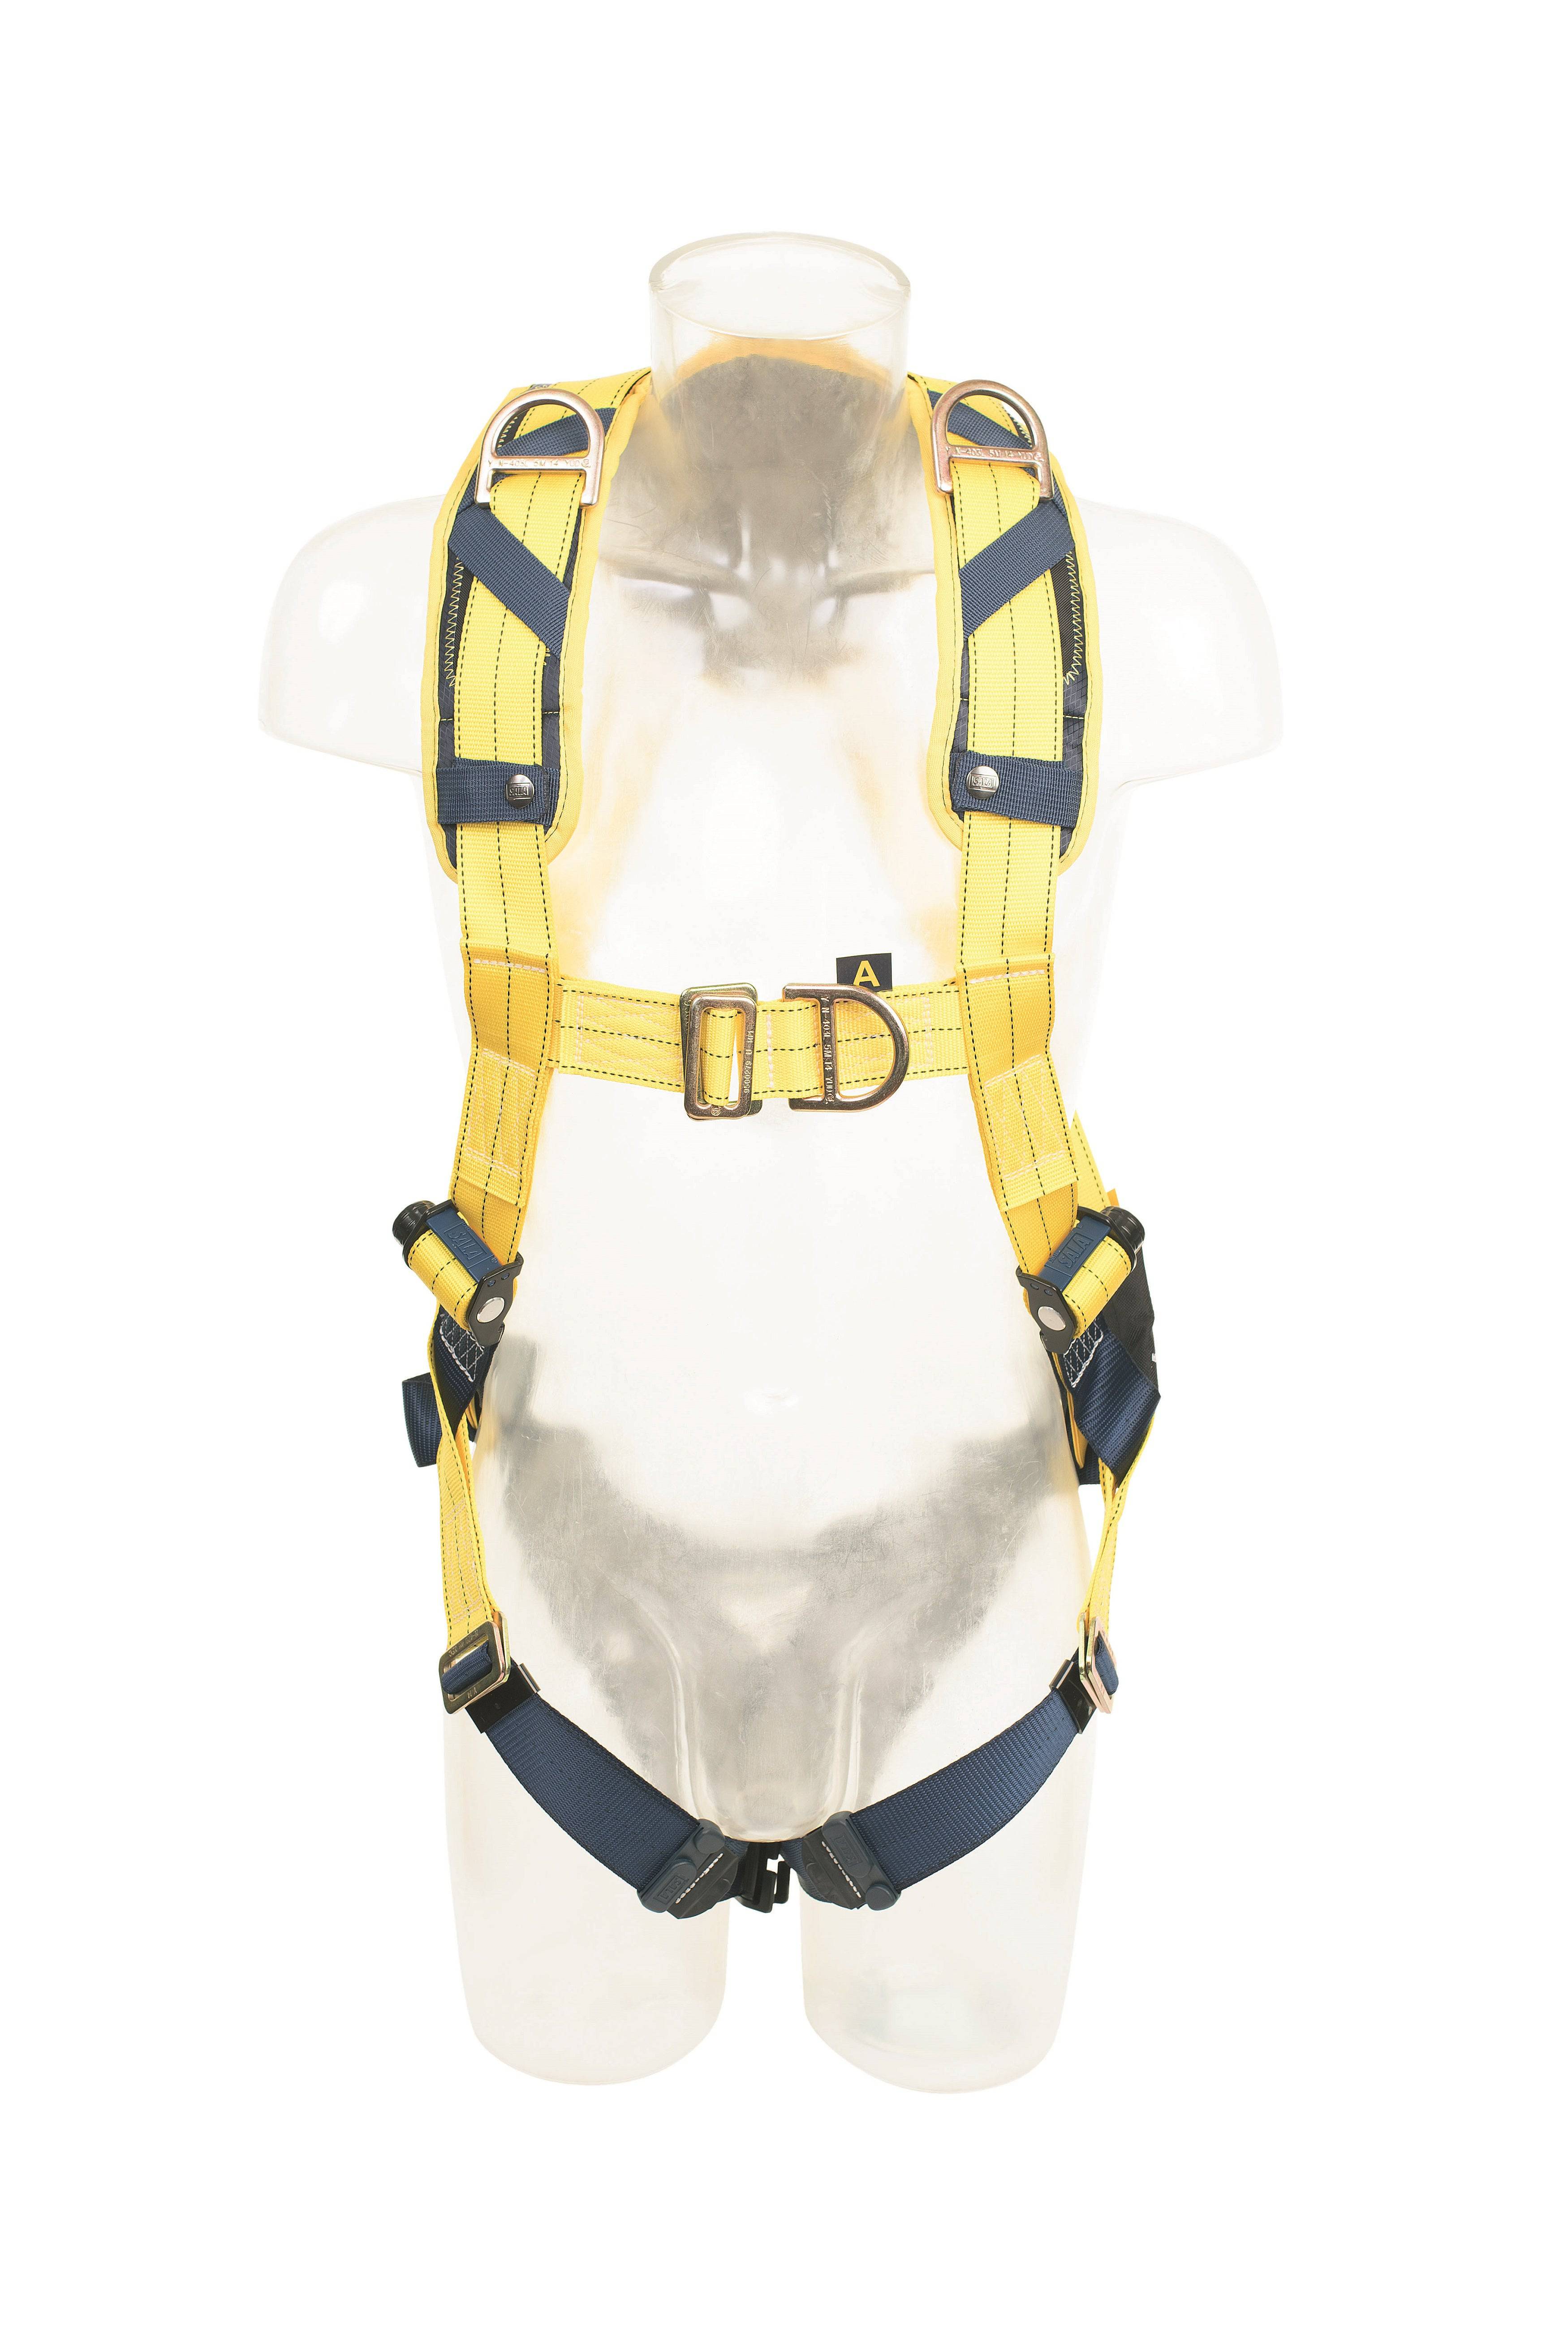 3M DBI SALA Delta Comfort Rescue Harness - SecureHeights